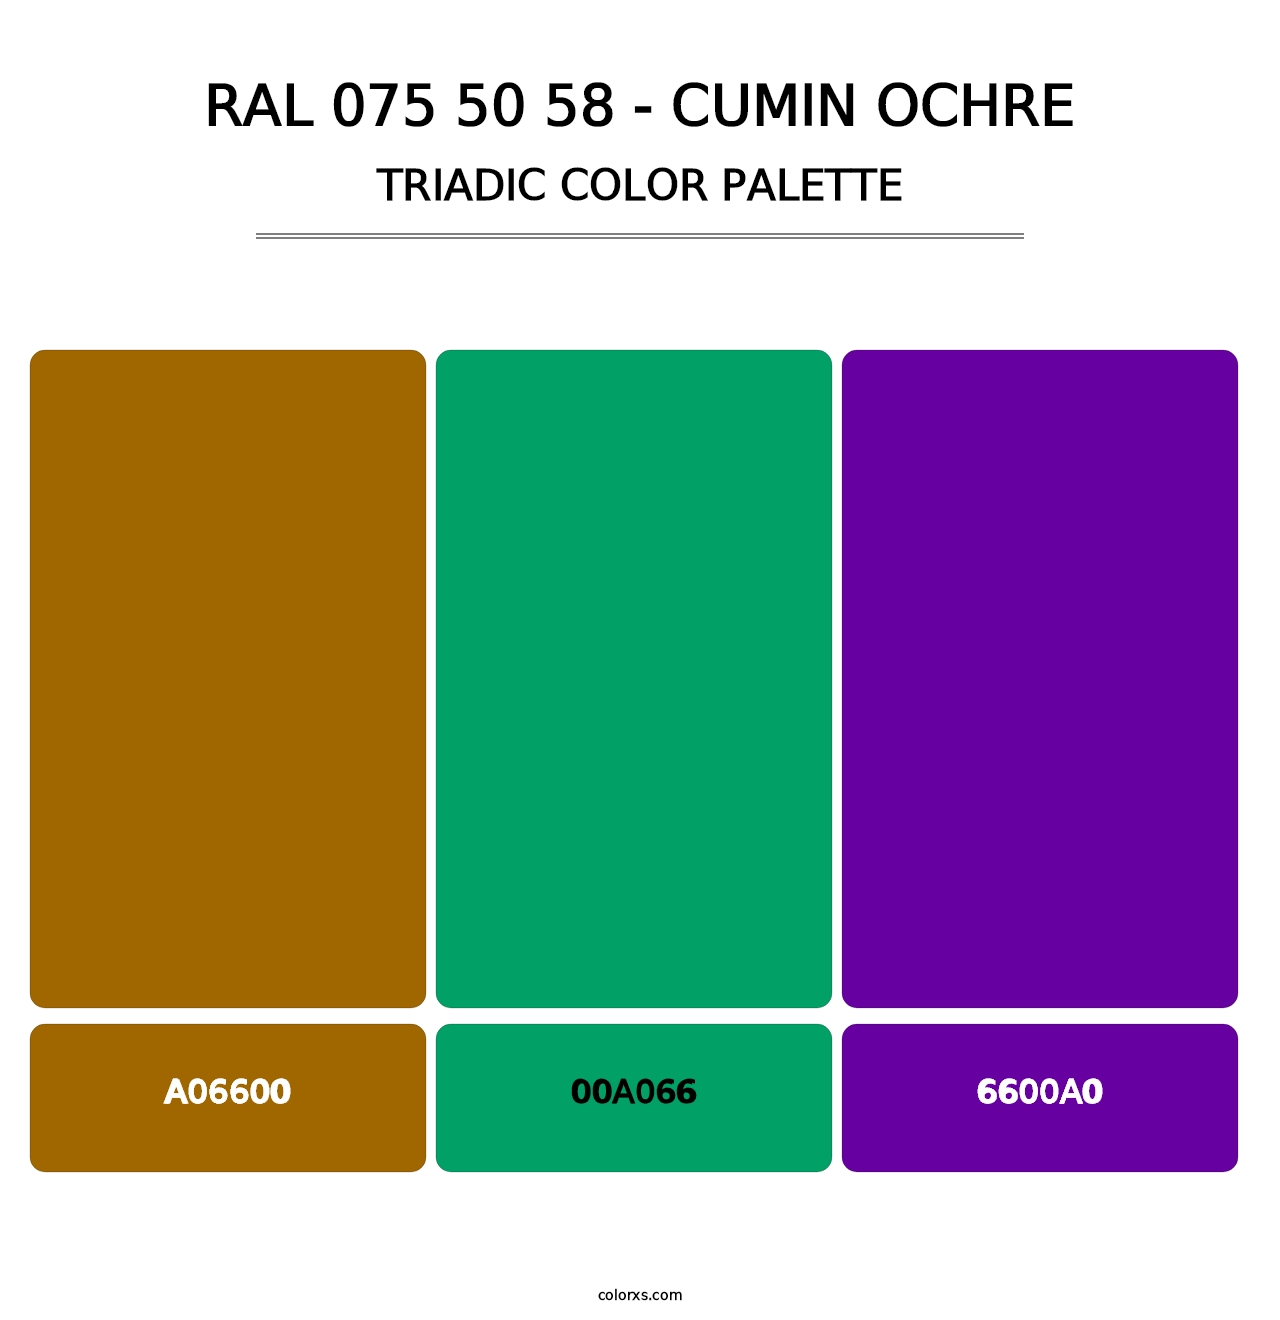 RAL 075 50 58 - Cumin Ochre - Triadic Color Palette